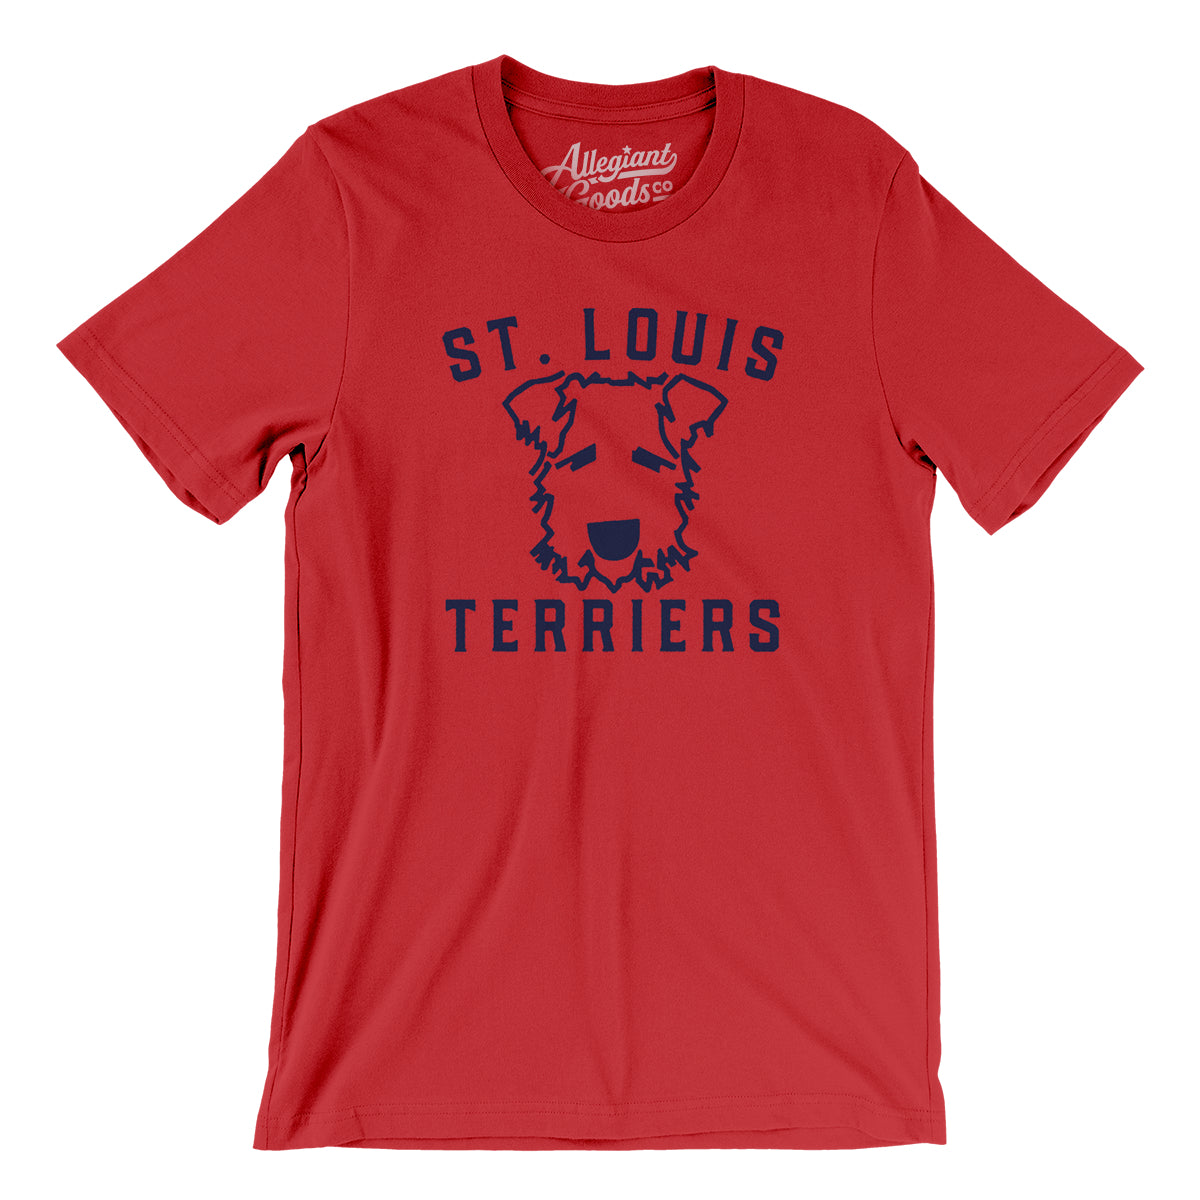 St. Louis Terriers Baseball T-Shirt | Allegiant Goods Co. Red / 2XL